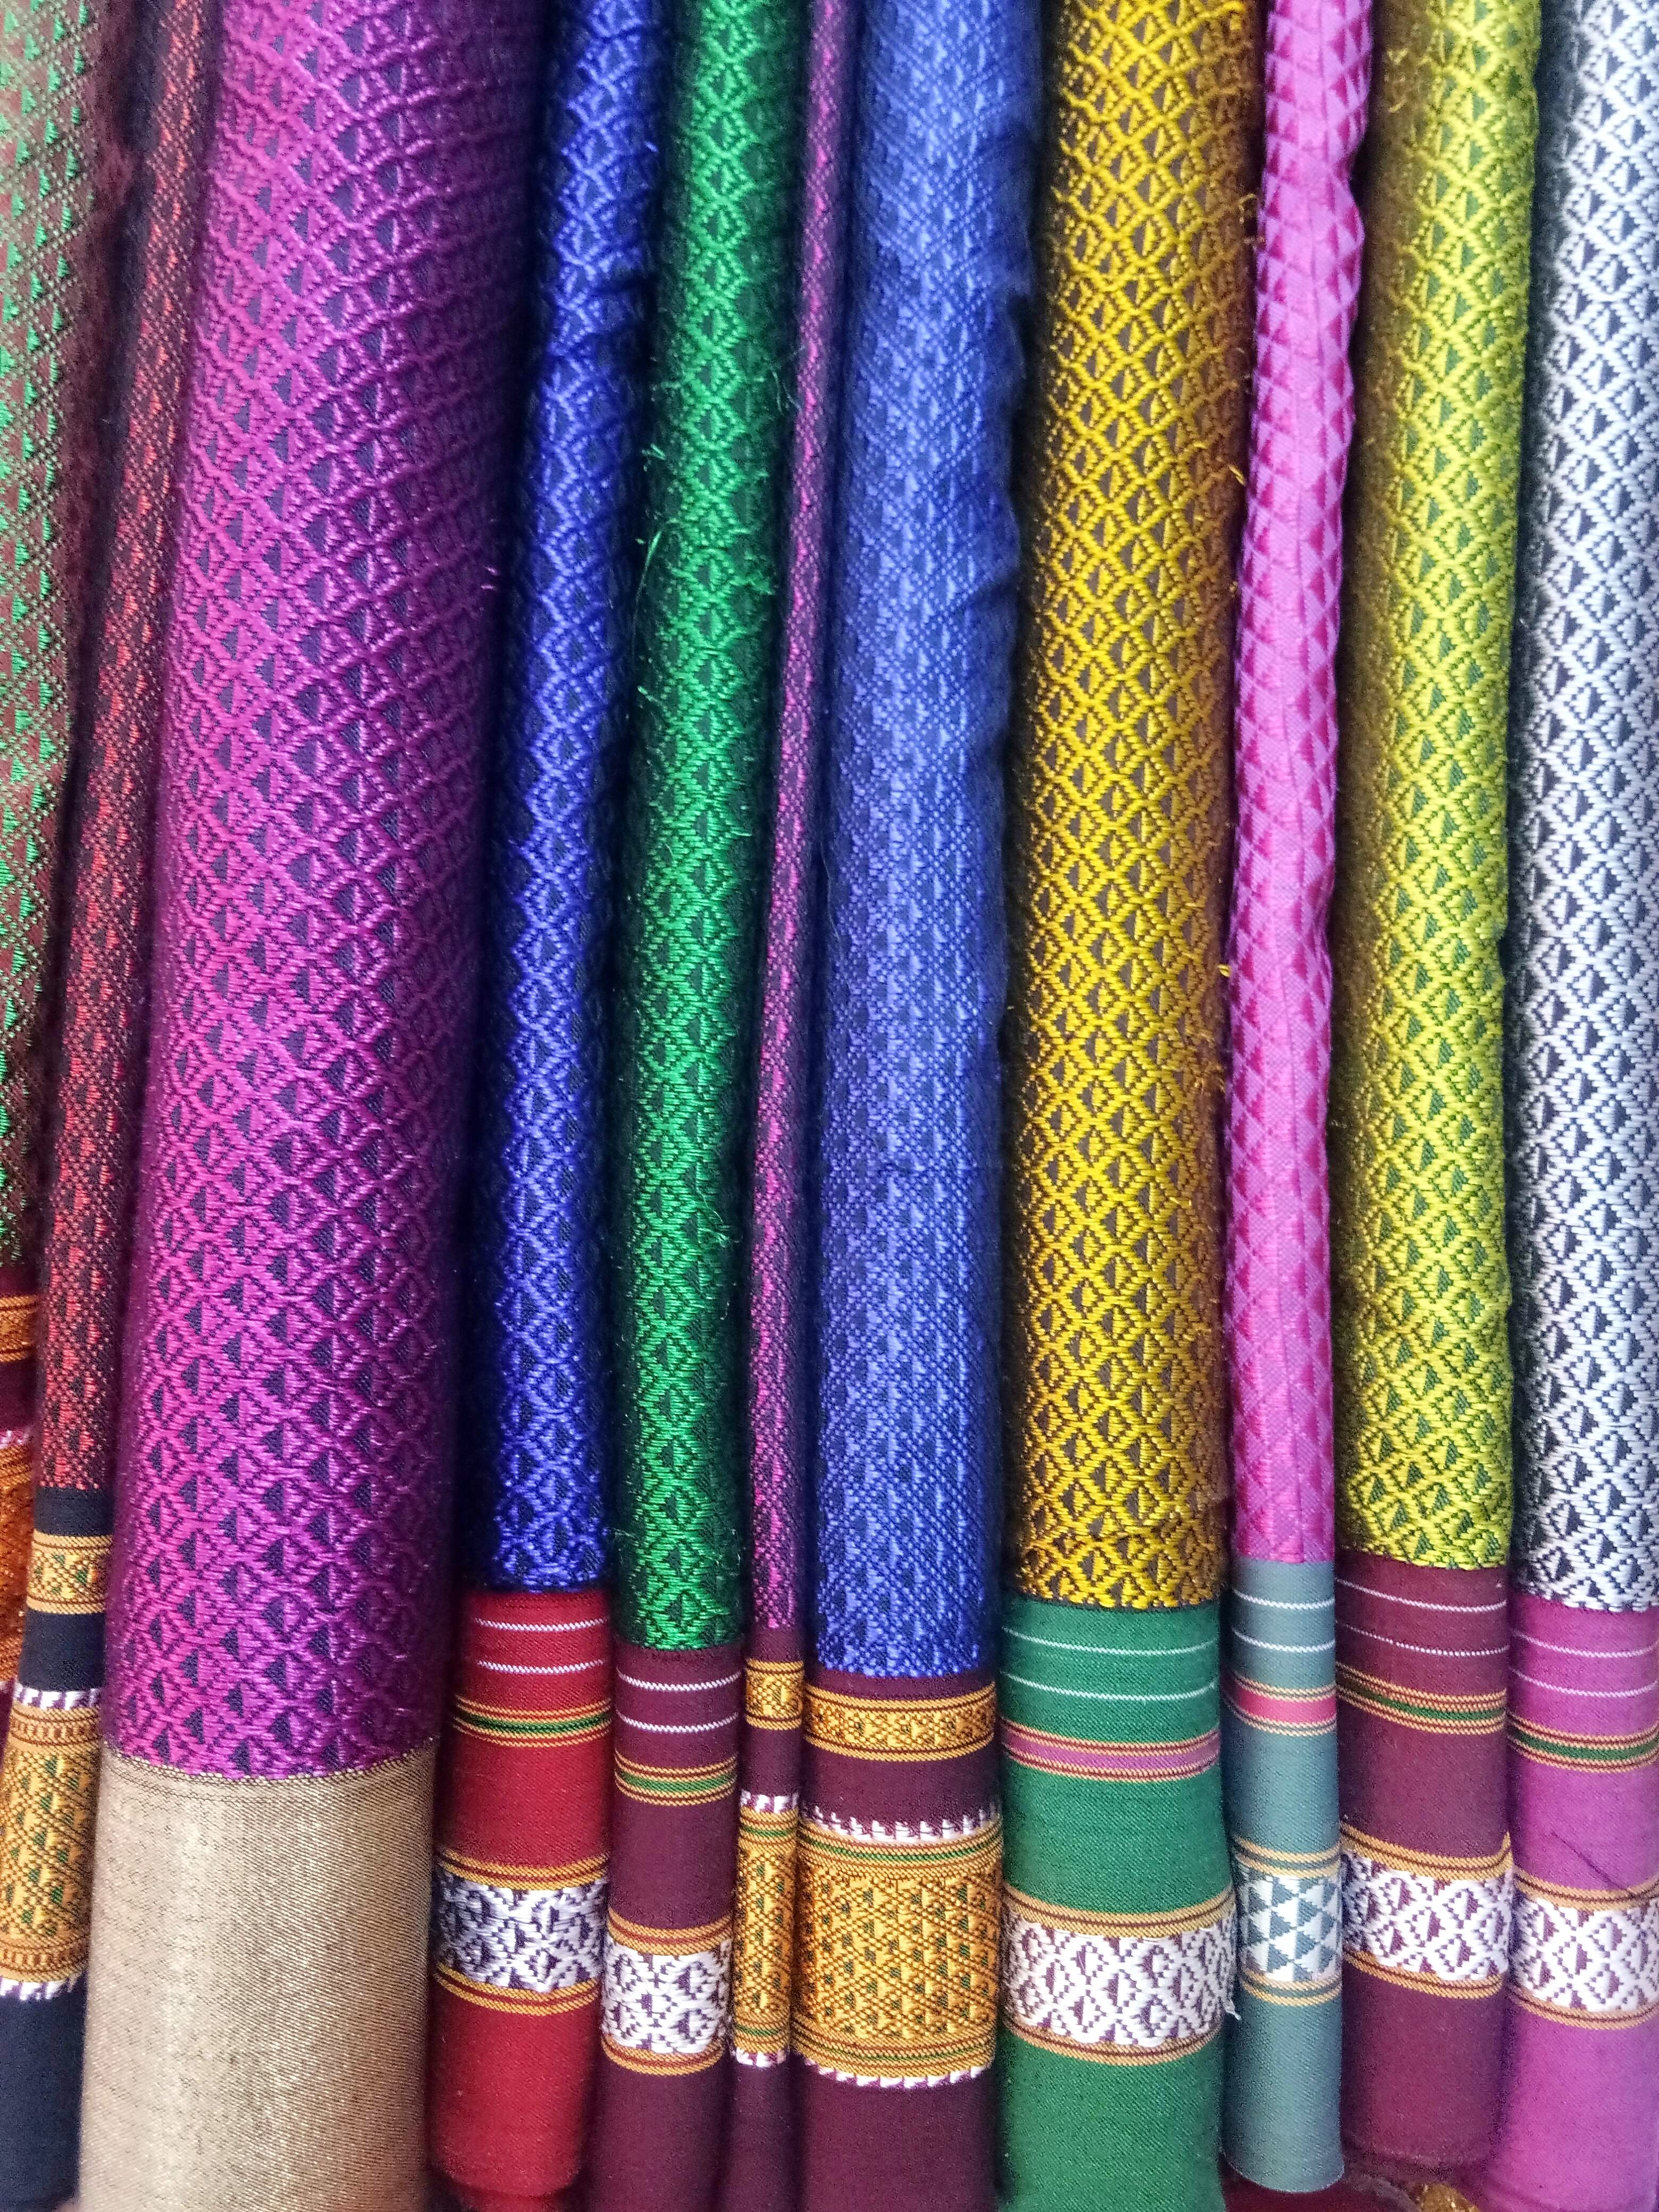 Textile,Woven fabric,Woolen,Wool,Thread,Pattern,Knitting